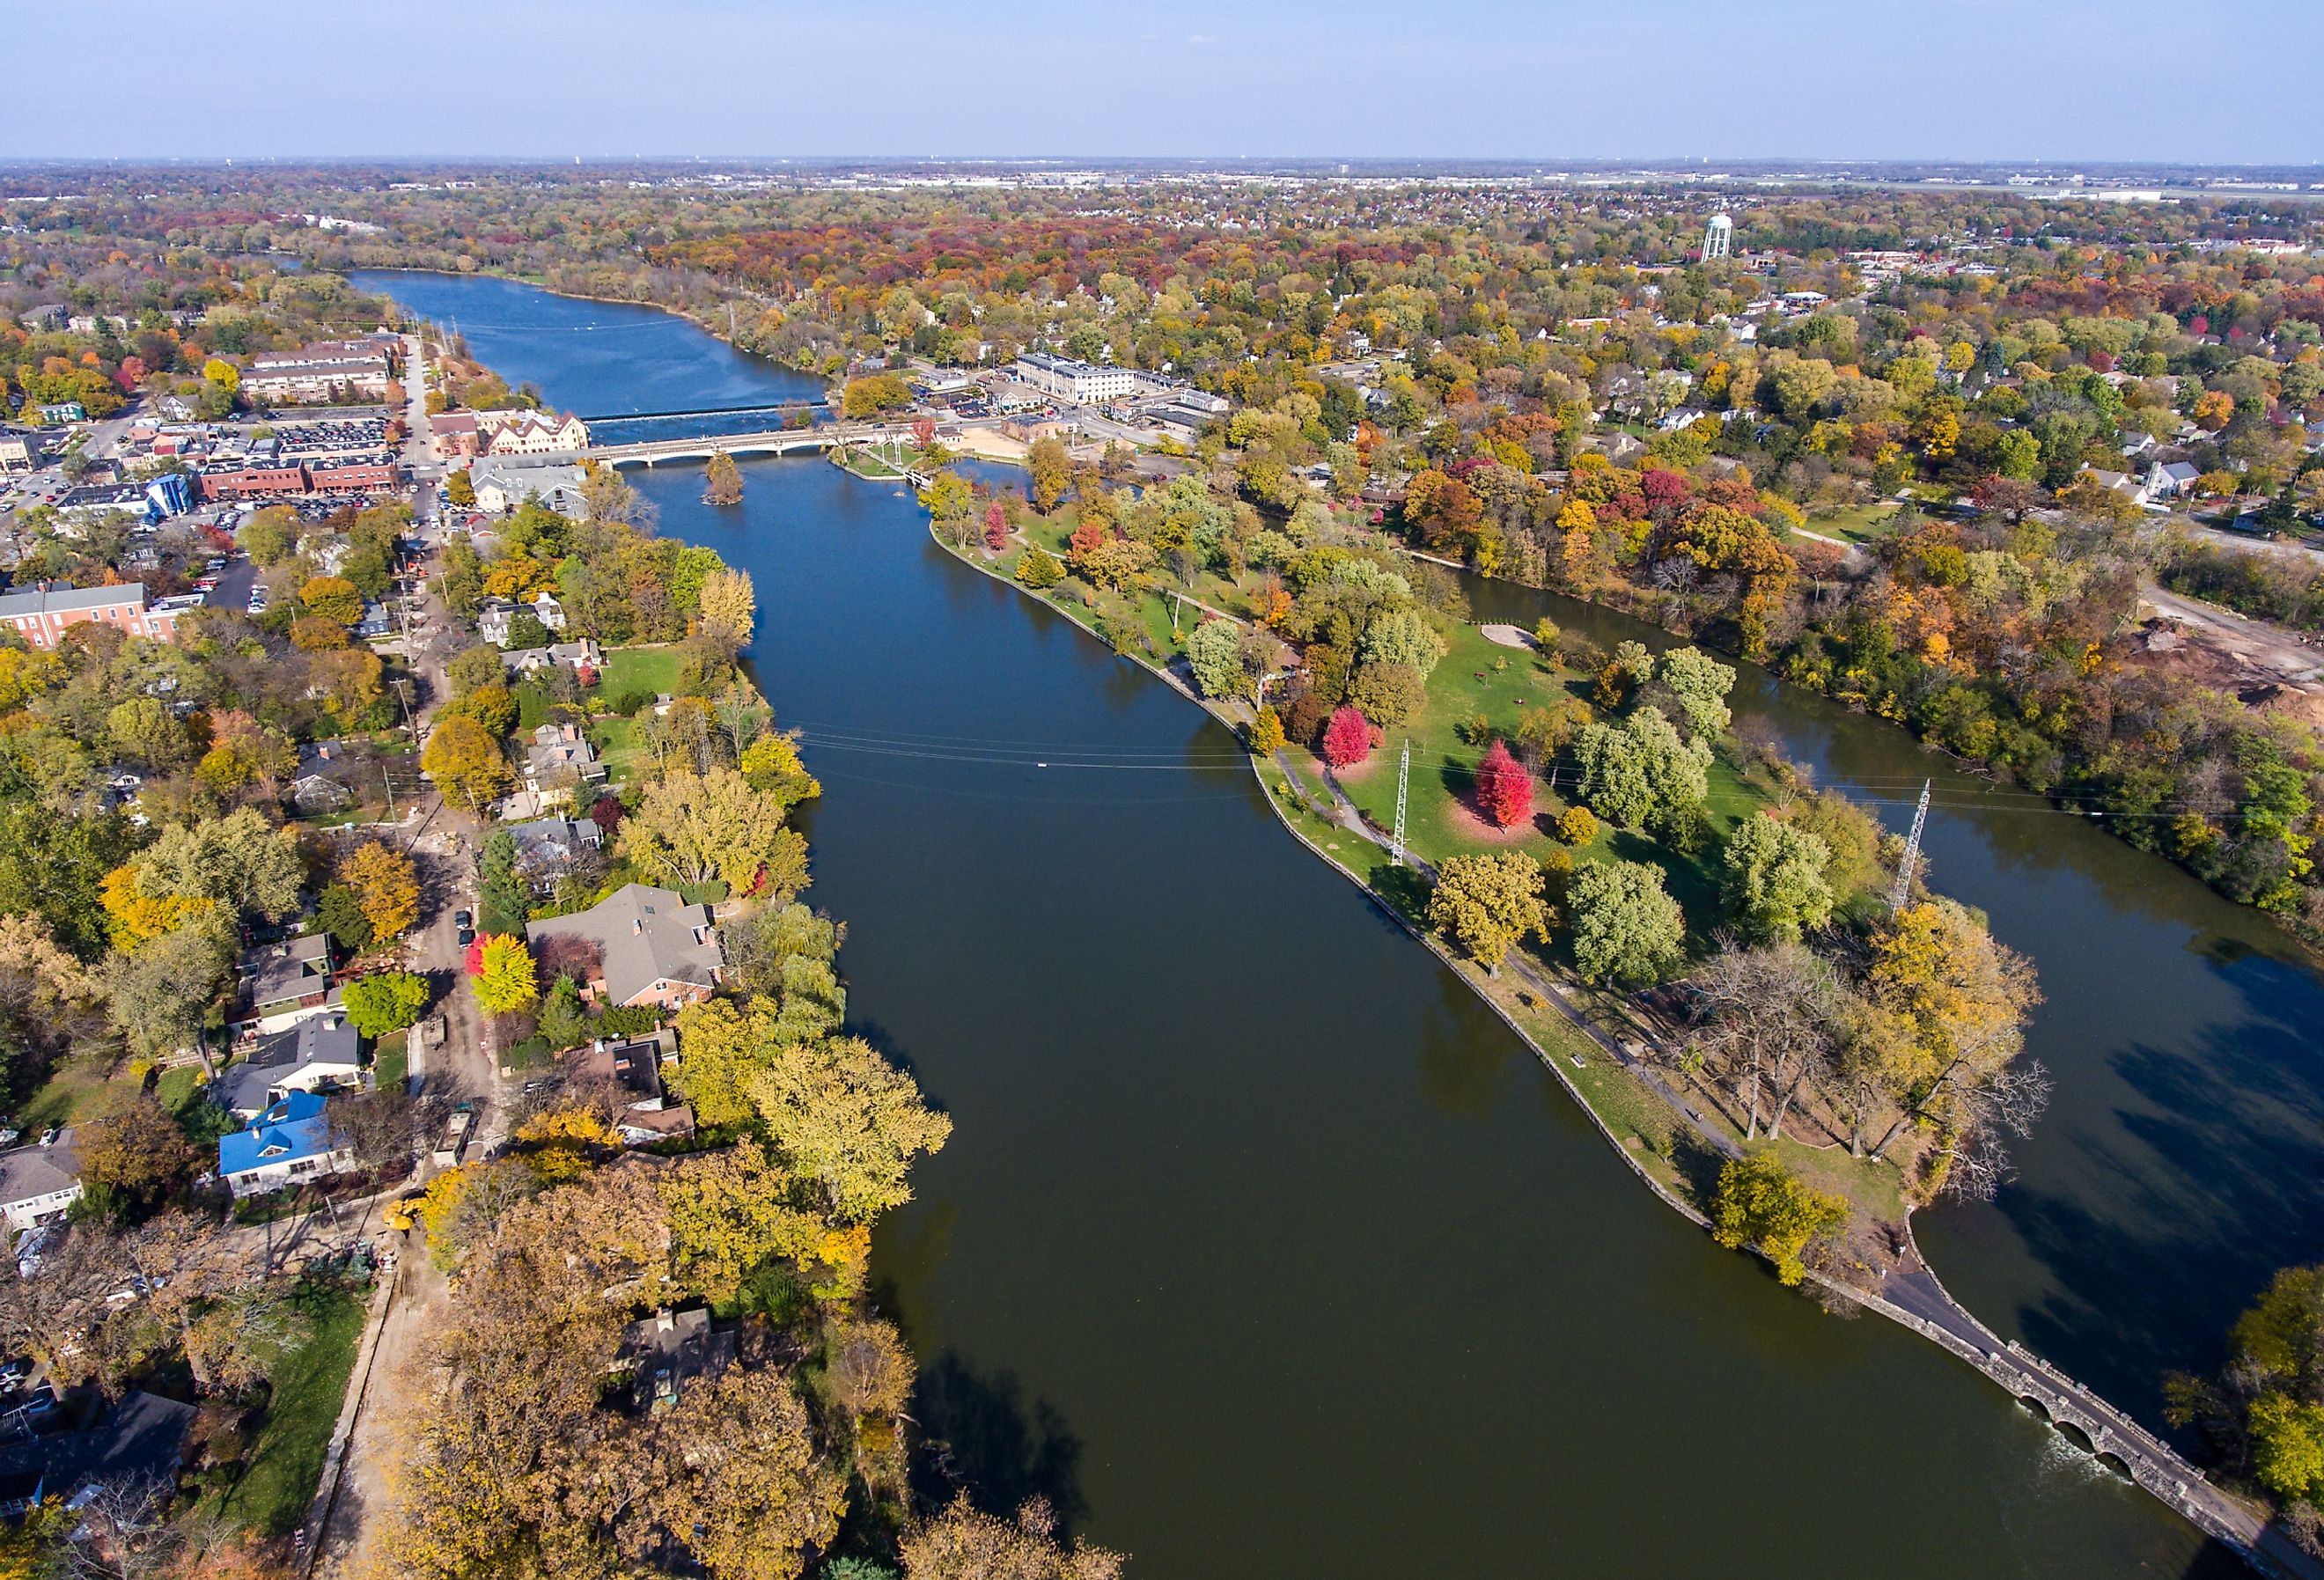 North view over Island Park in Geneva, Illinois. Image credit Roscoe Kramboe via Shutterstock. 